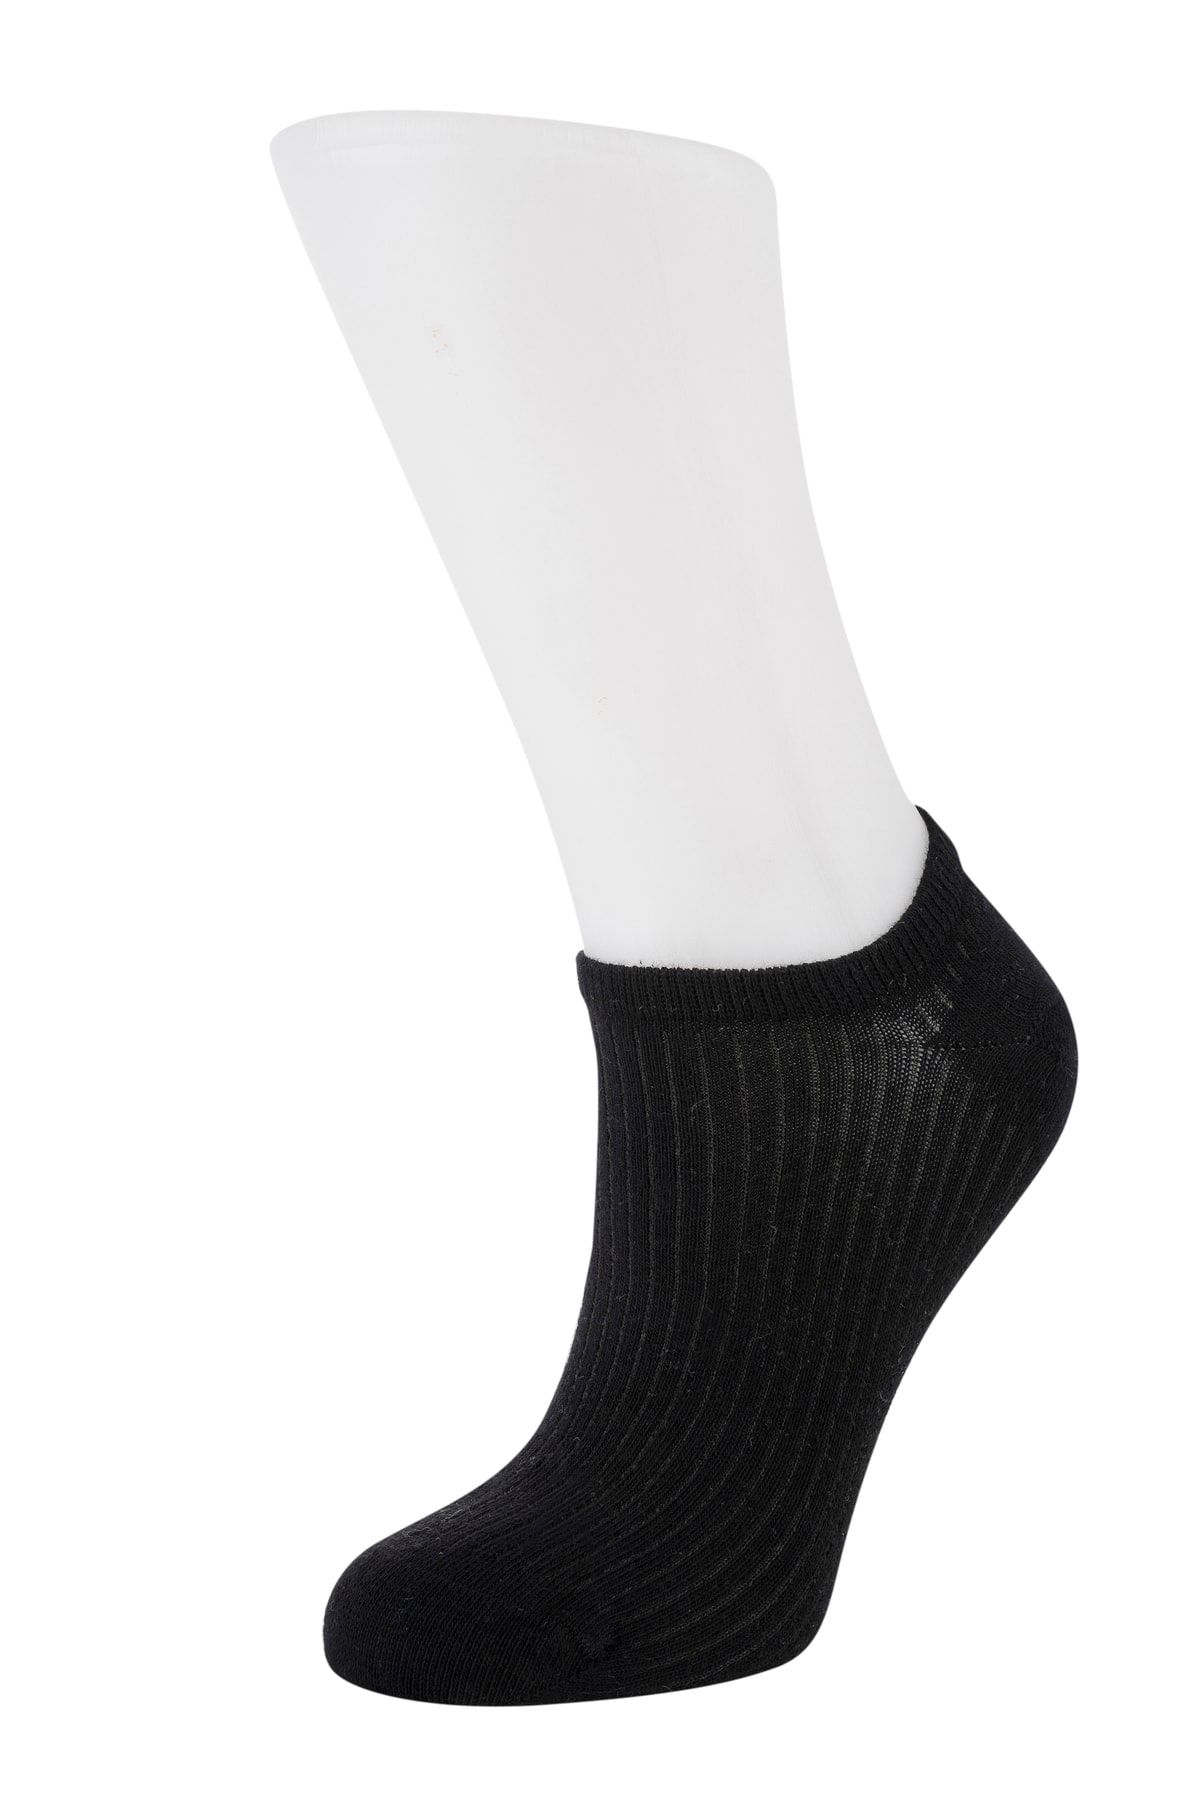 Moyra Socks 6'lı Derby Kadın Siyah Sneakers Patik Çorap